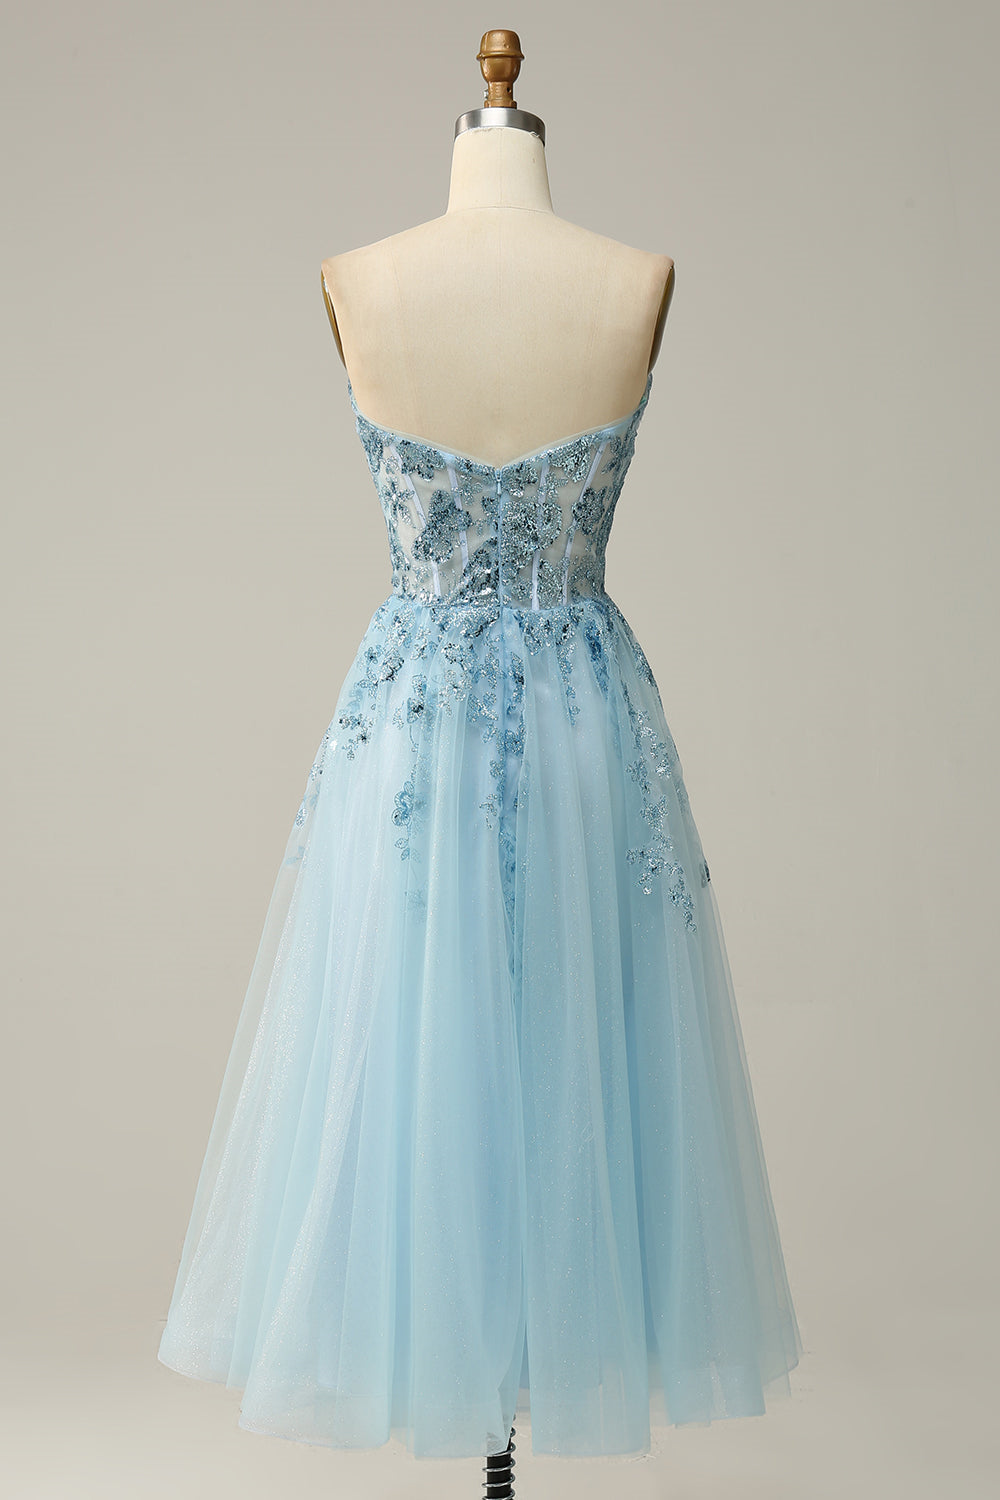 Light Blue Strapless Plunging V Neck Sequin-Embroidered Tea-Length Prom Dress